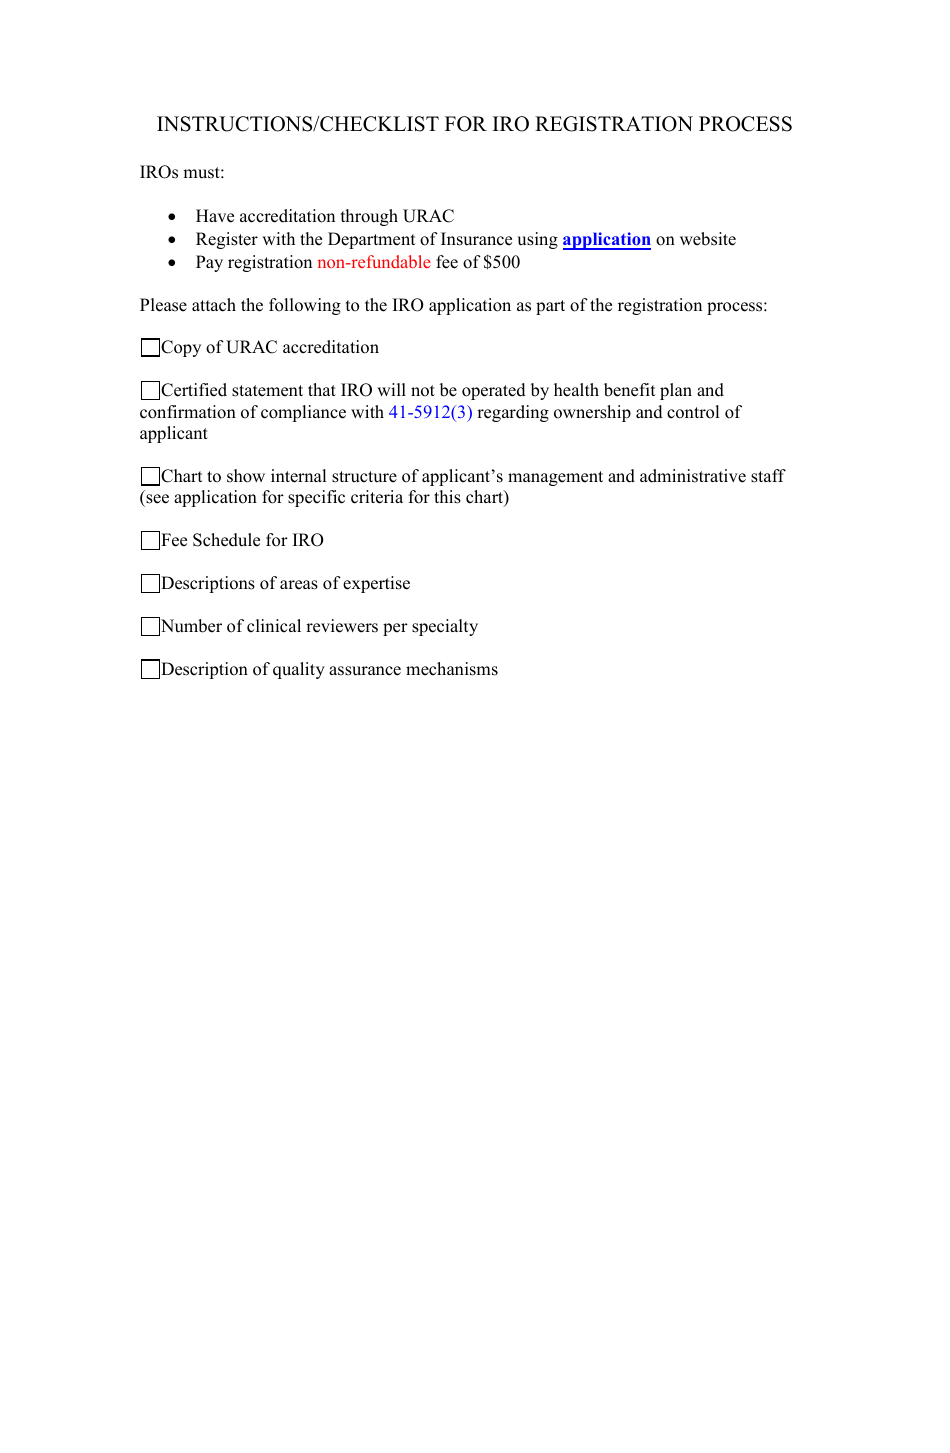 Instructions / Checklist for Iro Registration Process - Idaho, Page 1